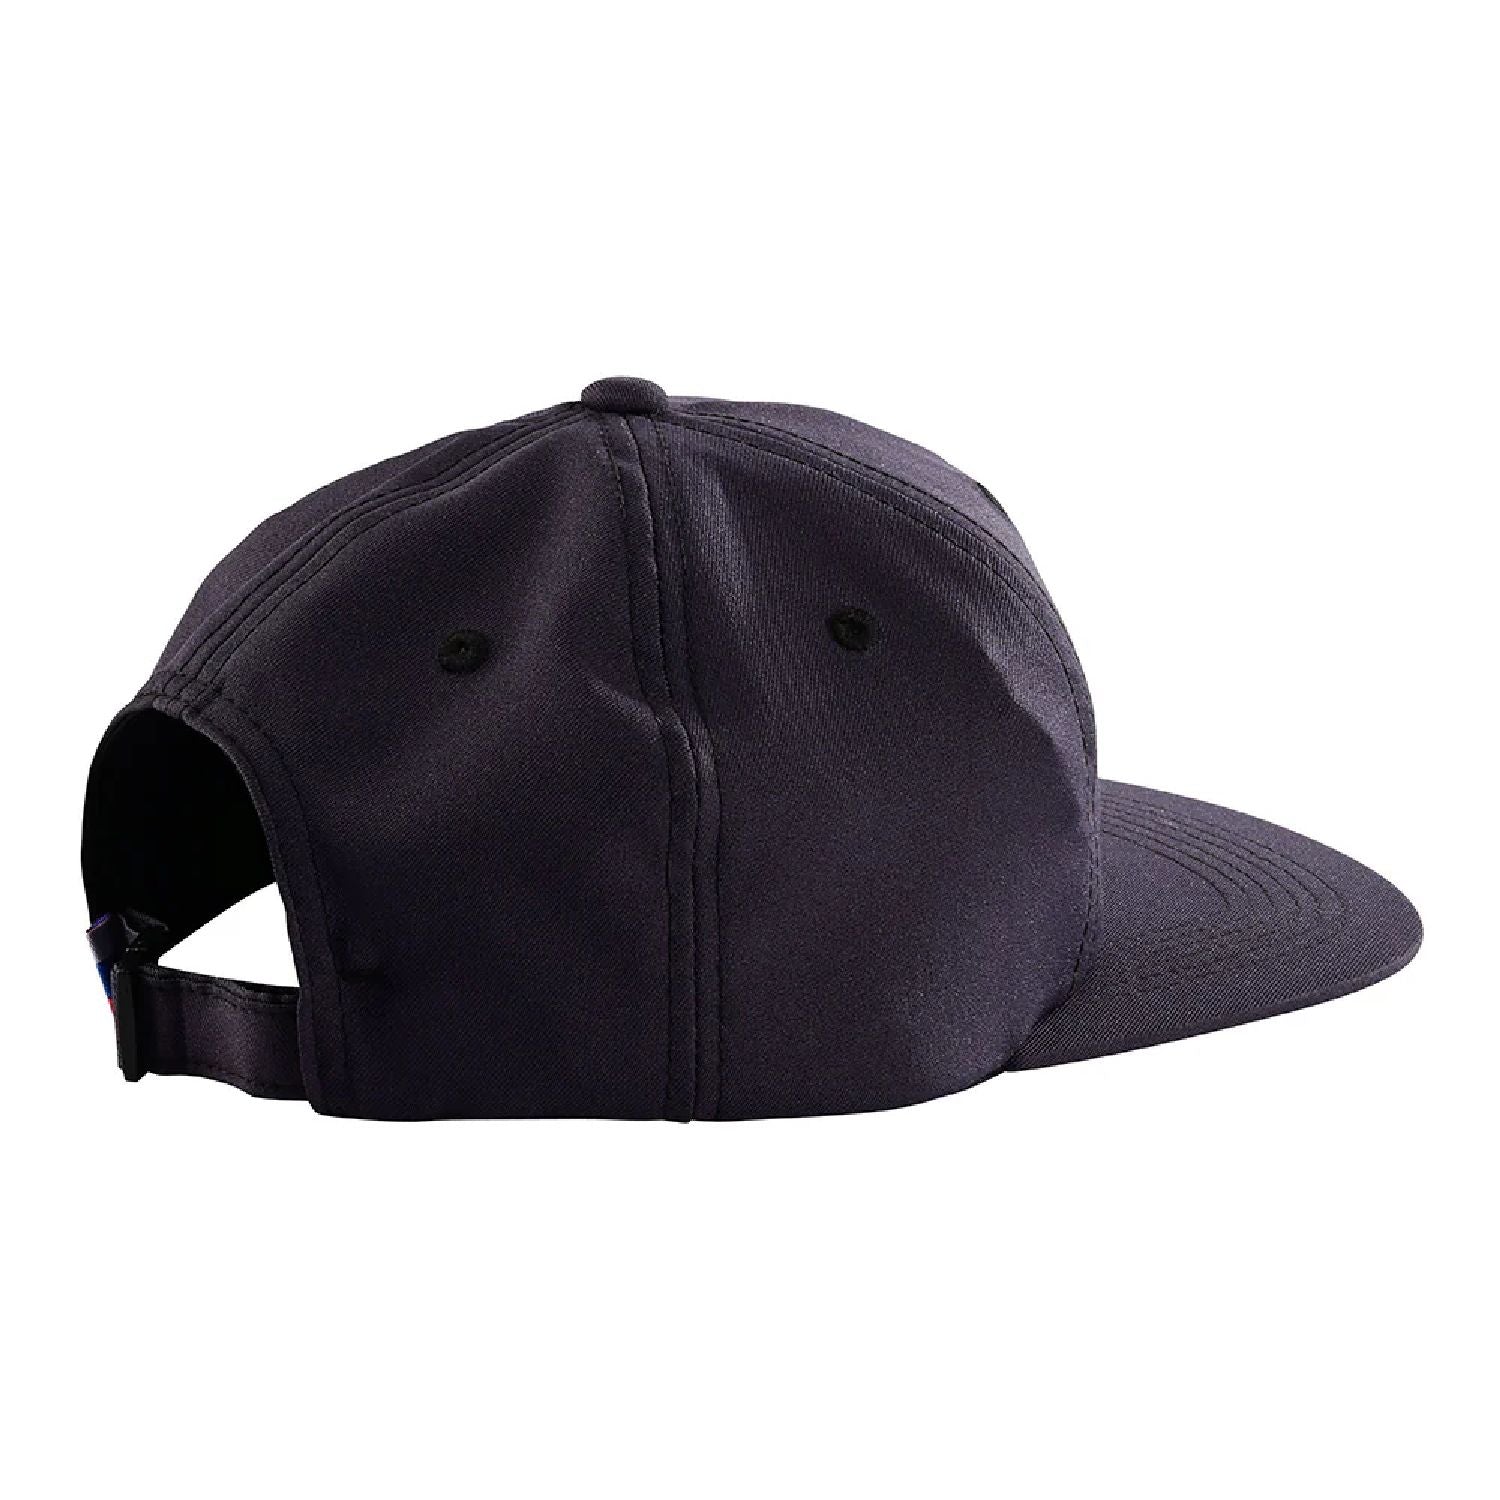 Troy Lee Designs Spun Snapback Hat Carbon - Troy Lee Designs Hats